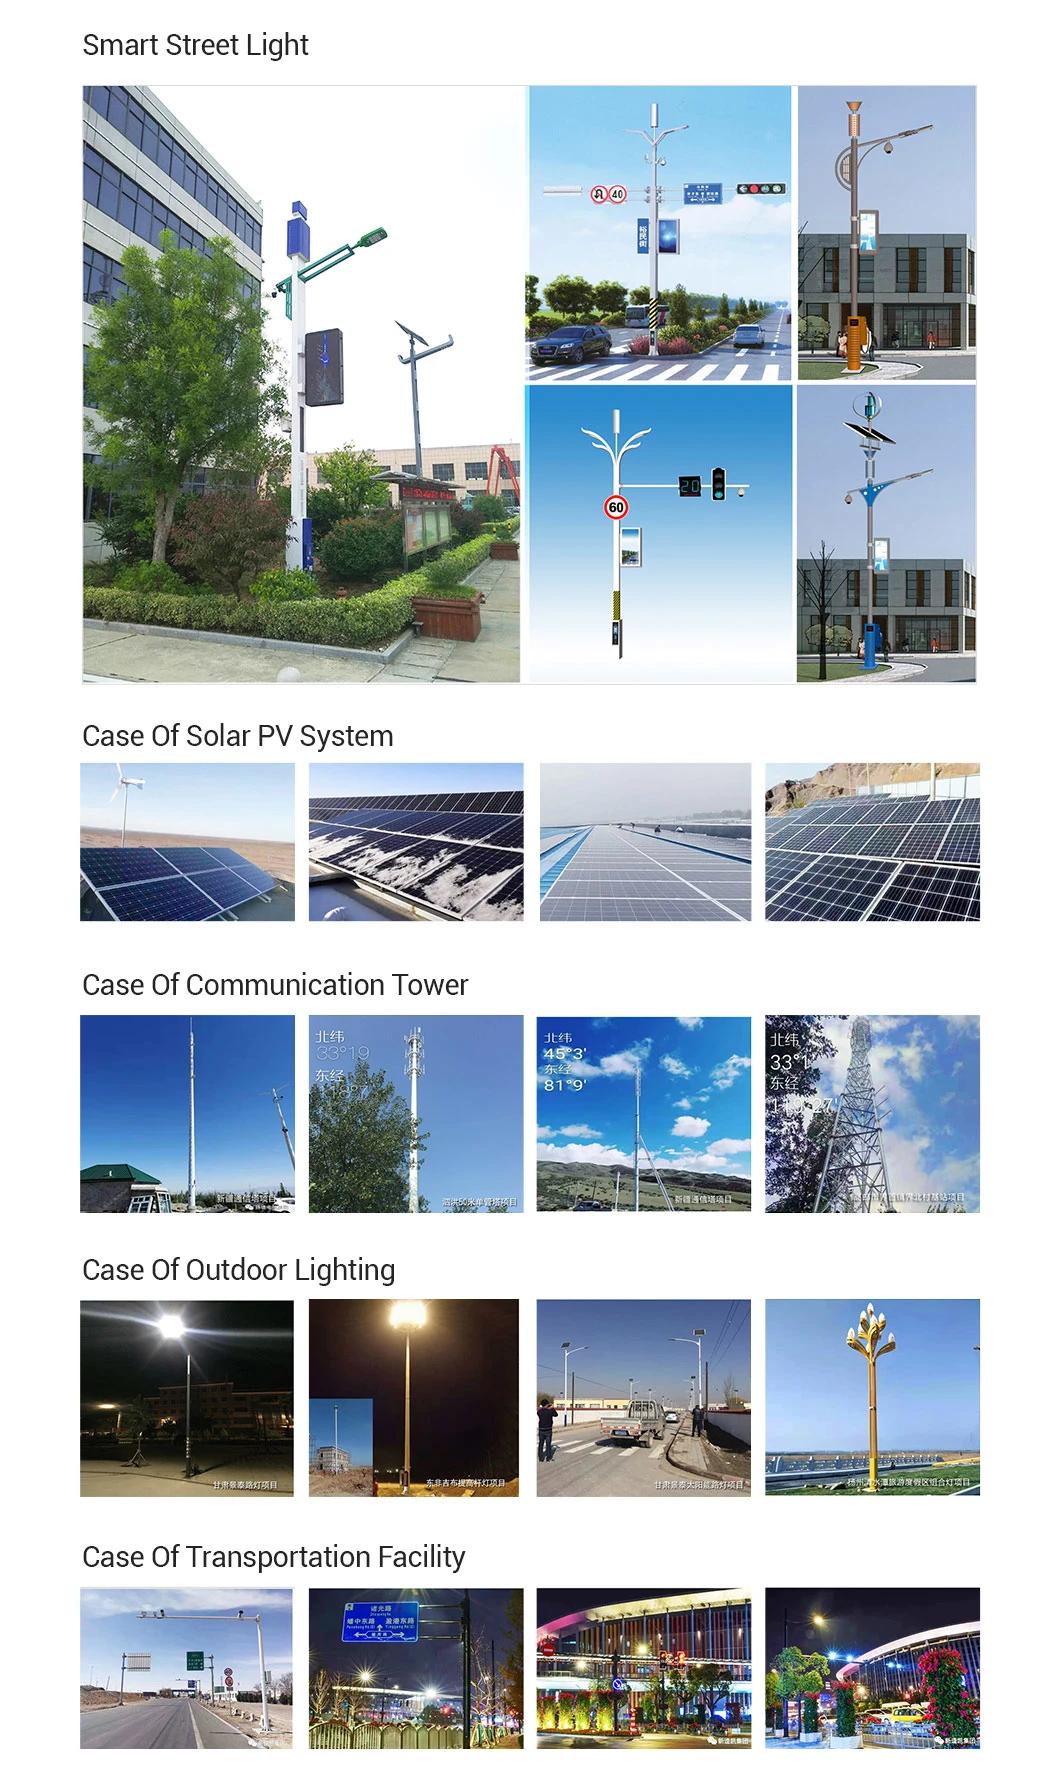 High Quality Outdoor 5m 6m 7m 8m 9m 10m 11m 12m Solar Street Light Pole